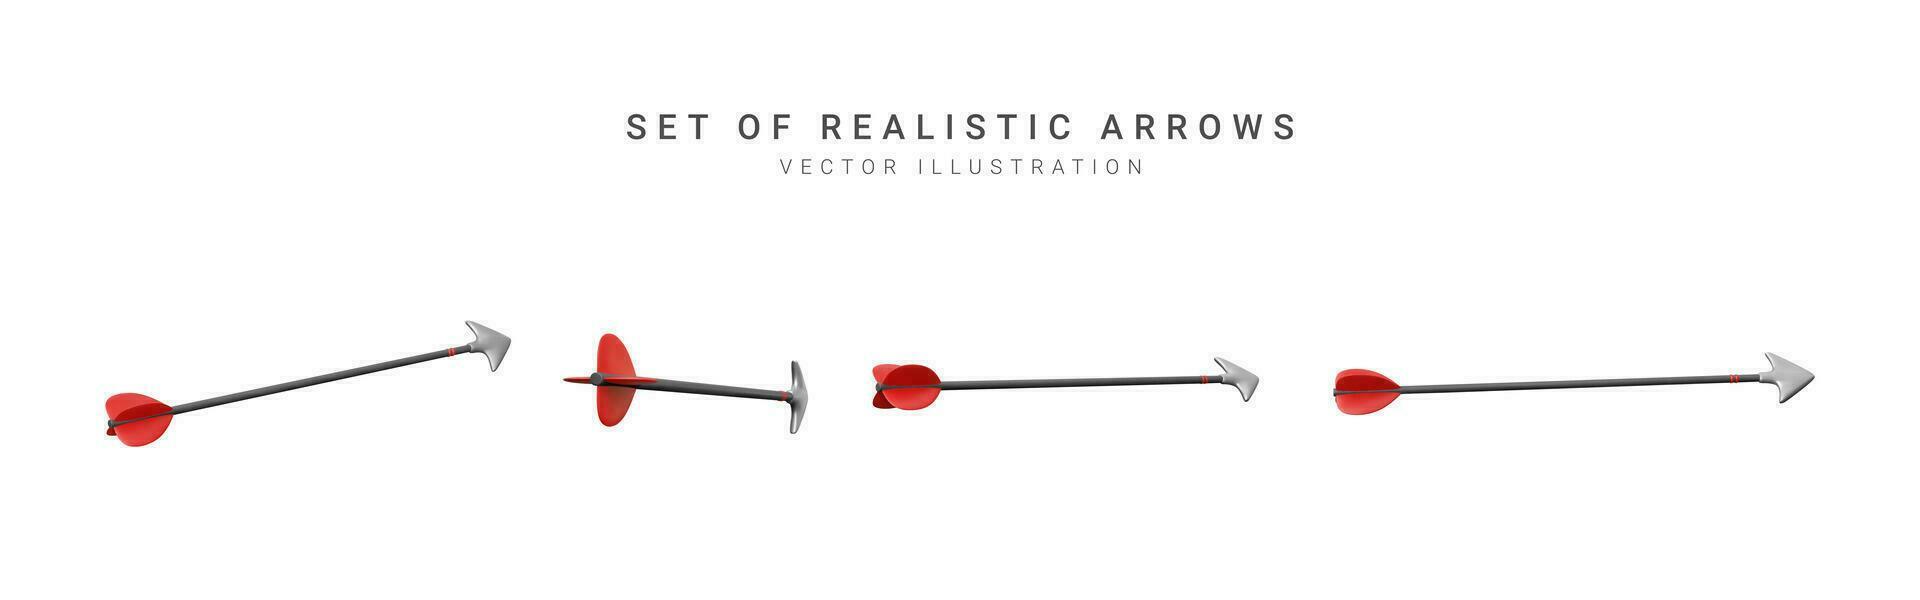 Set of realistic arrows. Vector illustration